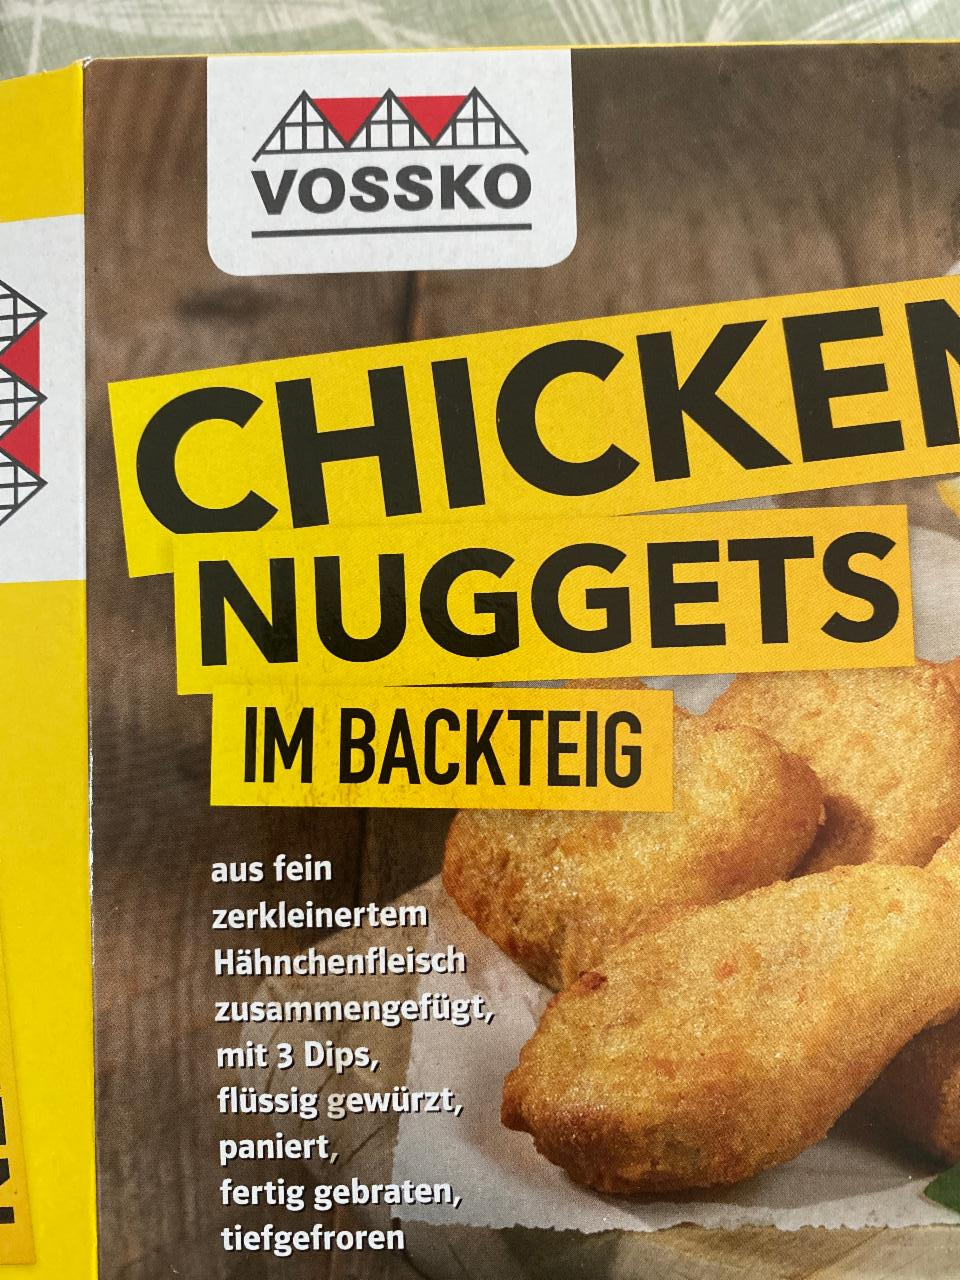 Фото - Chicken nuggets I’m backteig Vossko